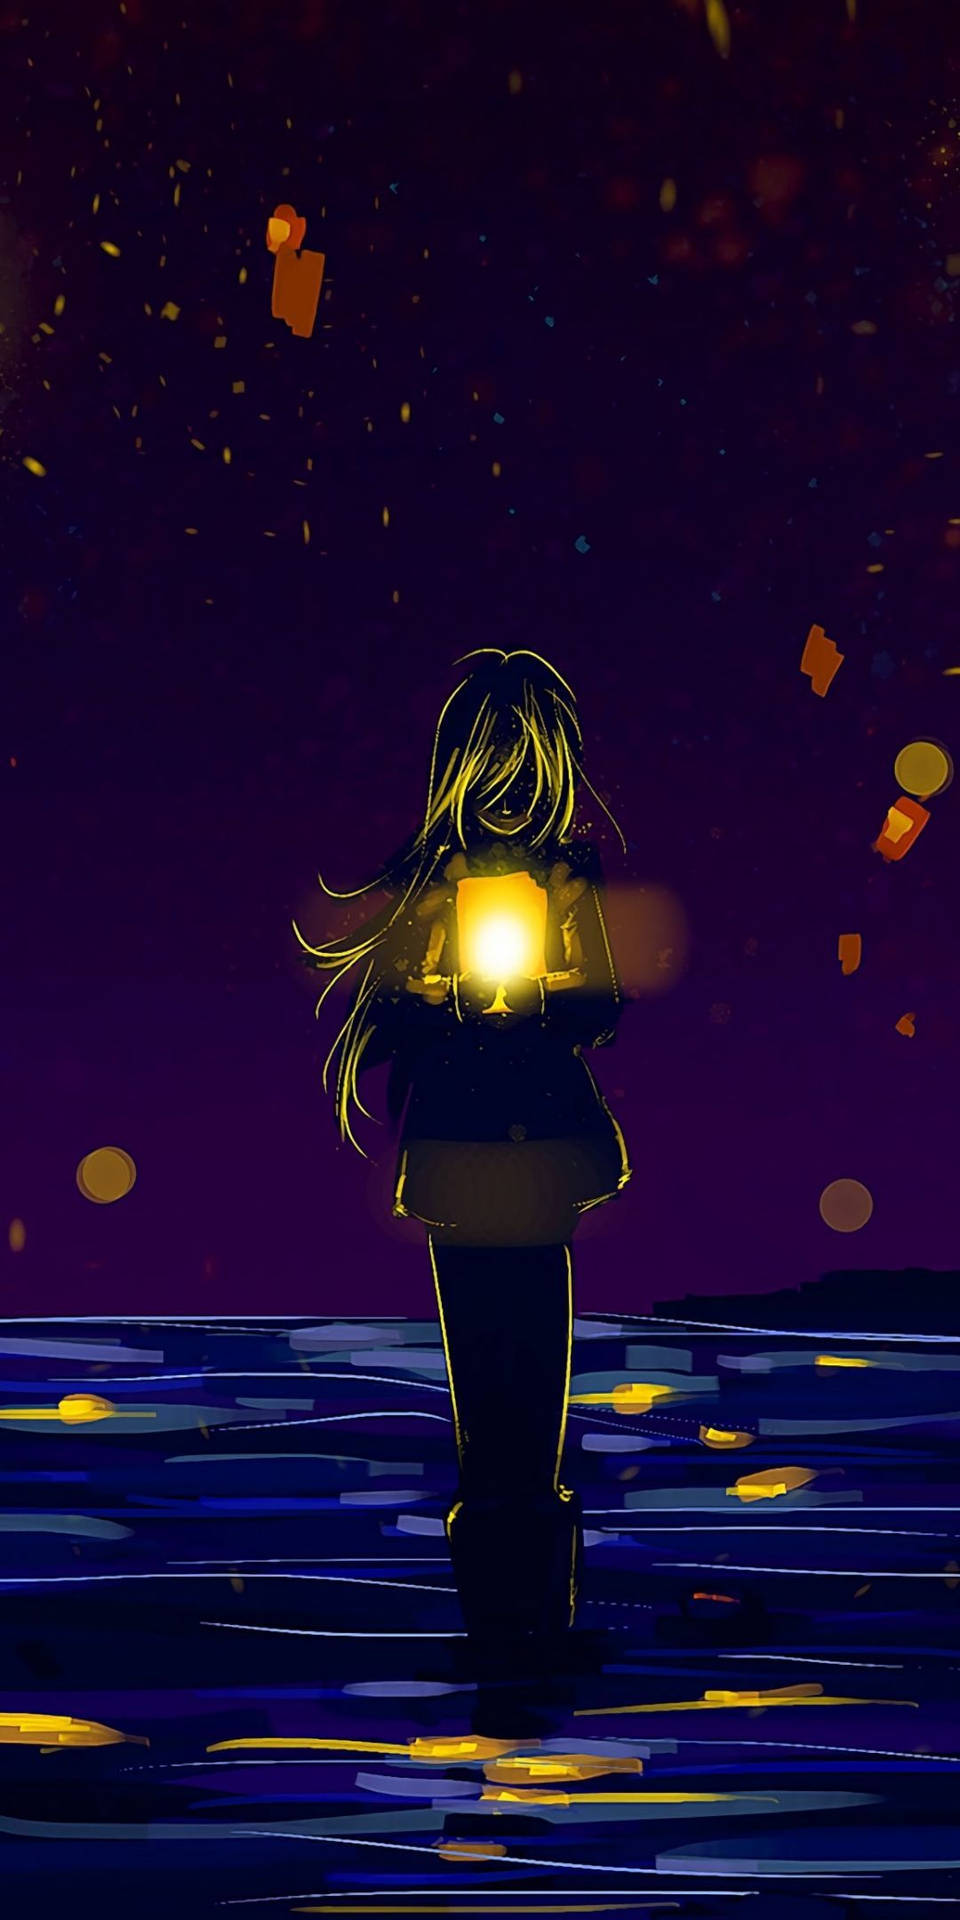 Download Anime Girl Sad Alone With Lantern Wallpaper 